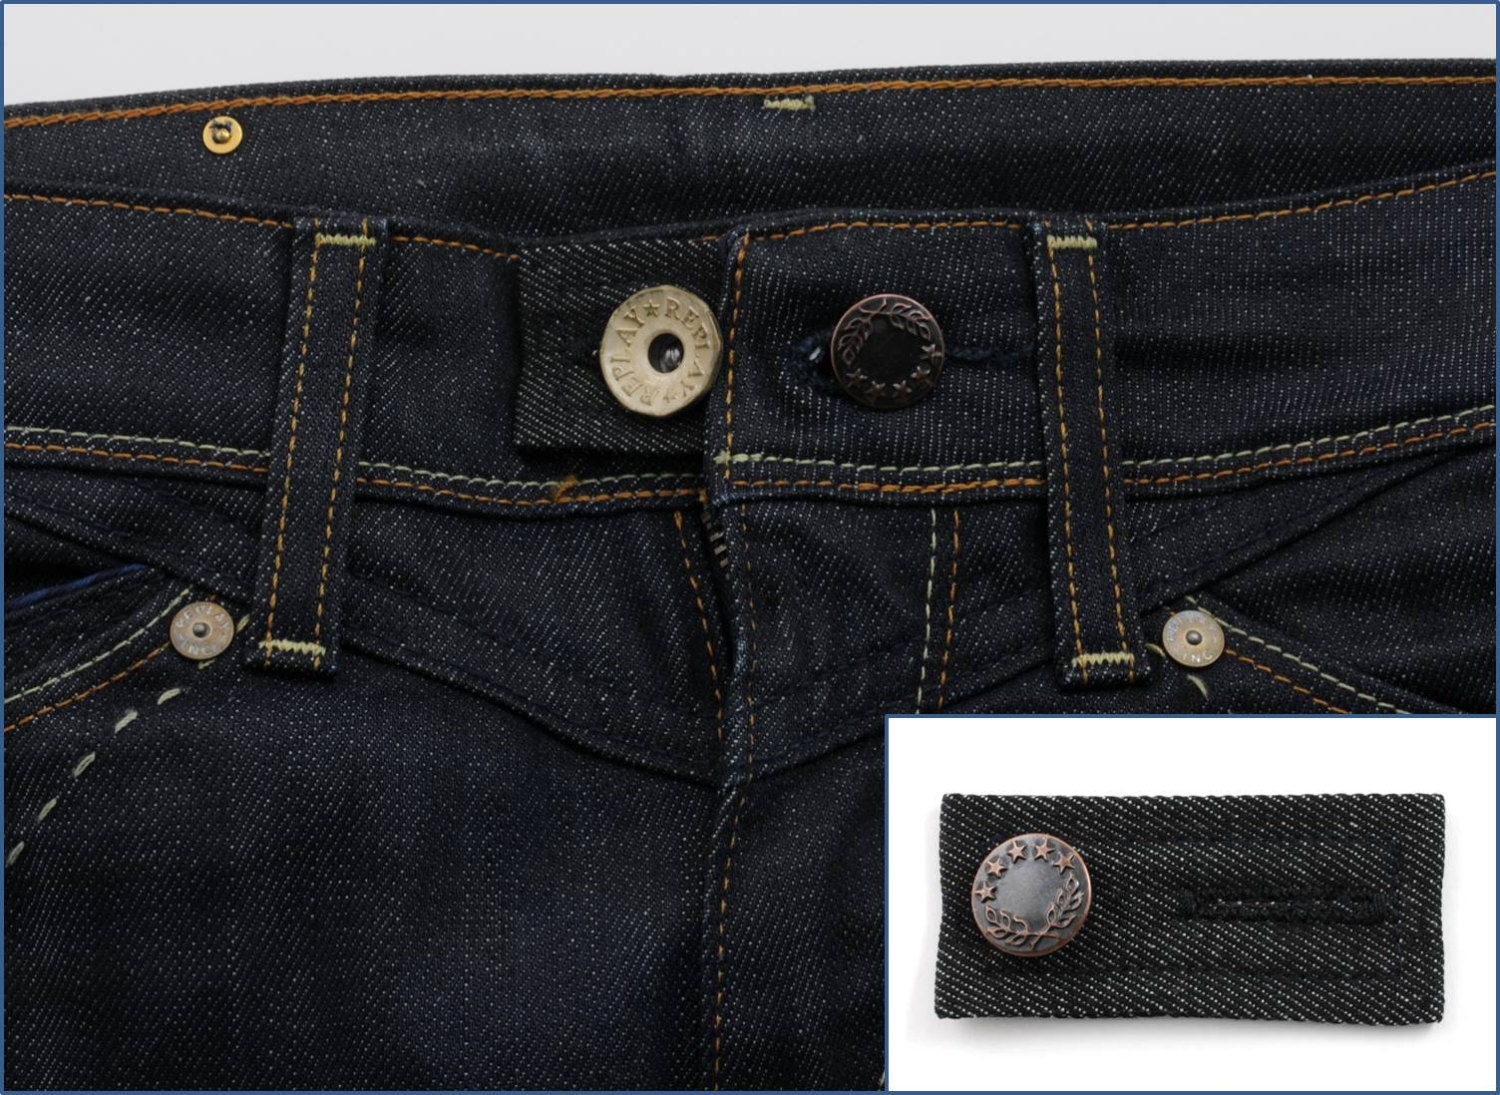 4pcs/set Denim Jeans Waist Extenders Waistband Expanders for Men and Women  Trousers Pants Jeans Skirt Button Extenders